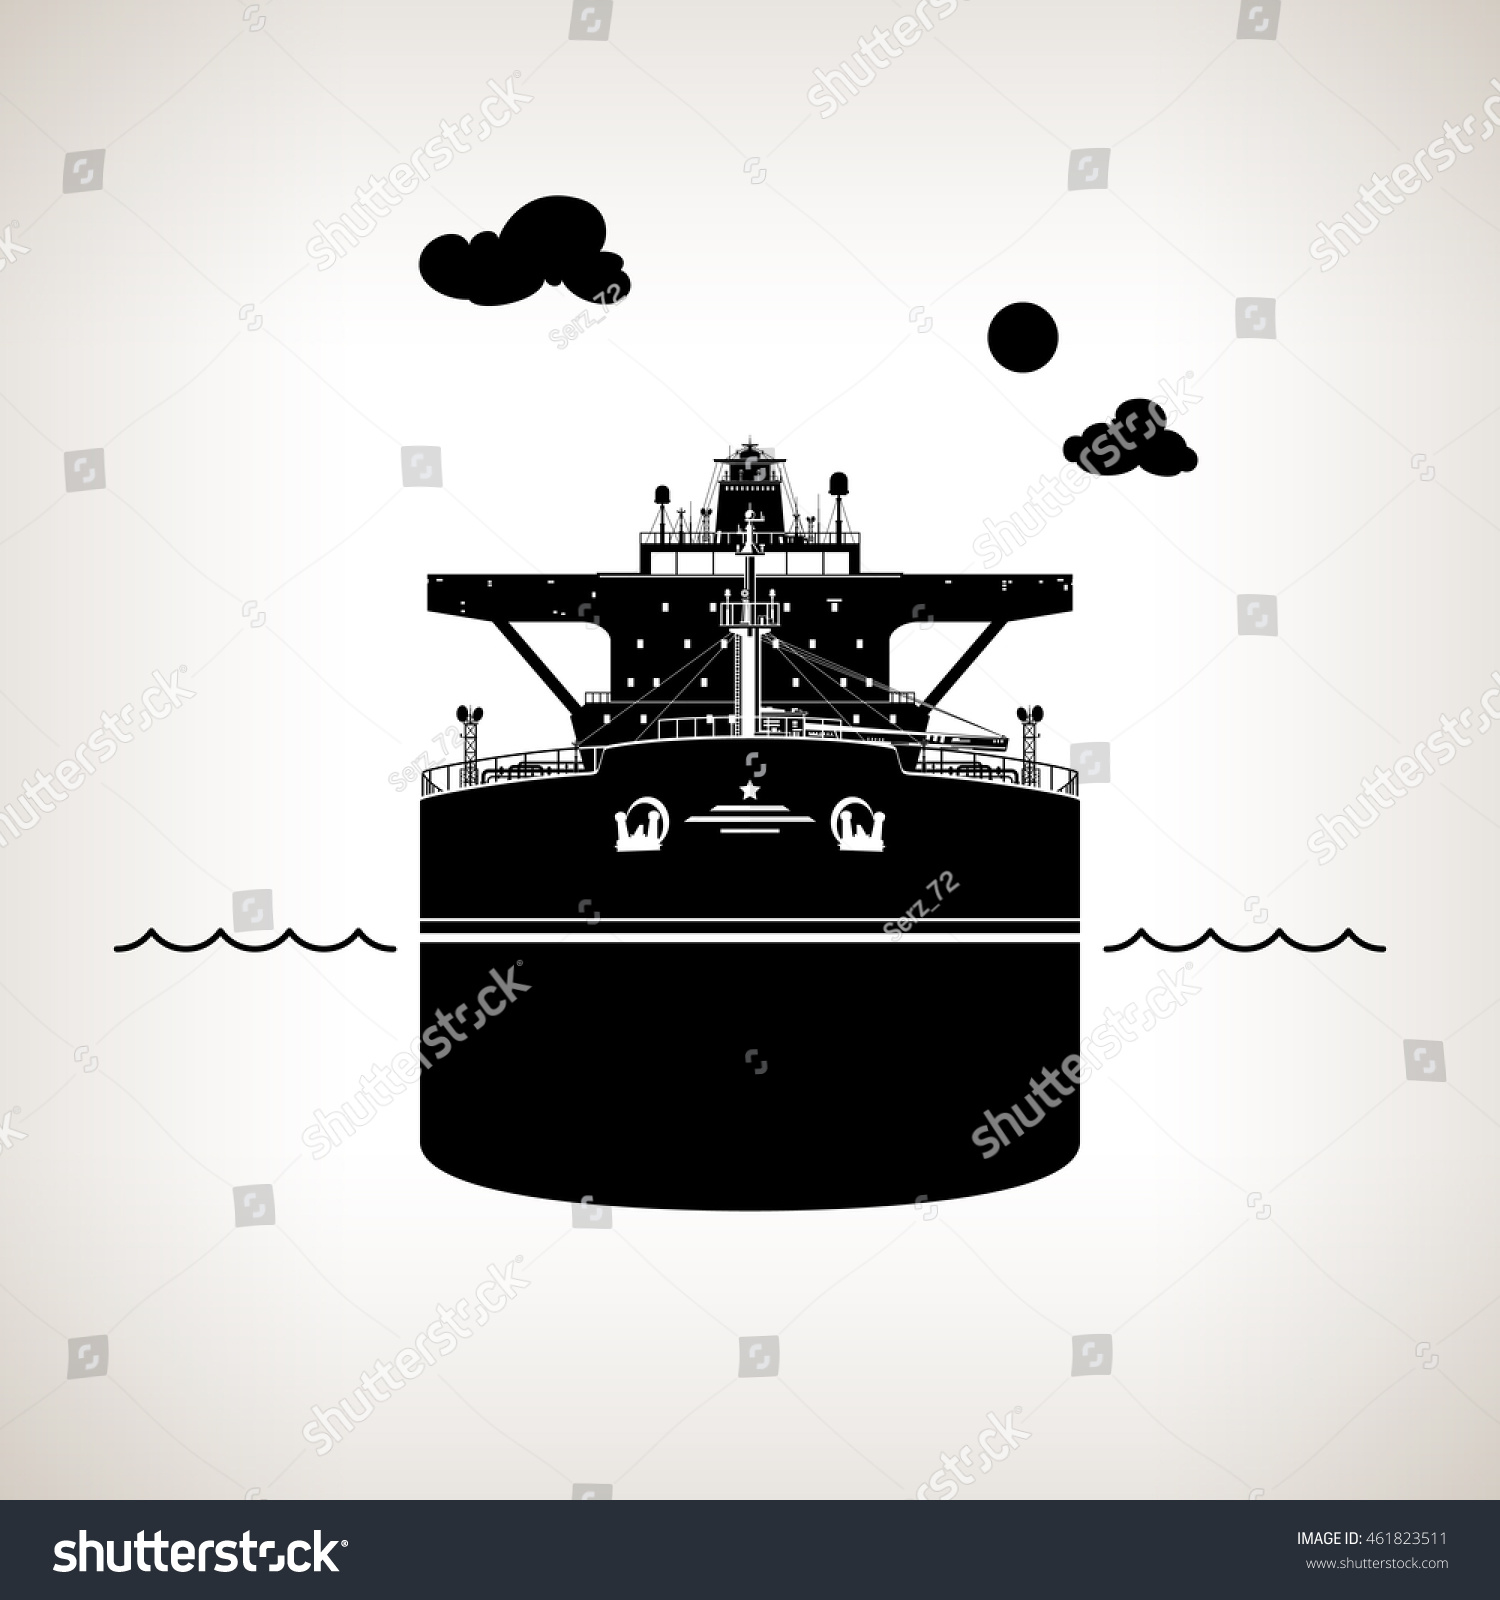 SVG of Front View of the Vessel, Oil Tanker on Light Background, International Freight Transportation, Silhouette Vessel for the Transportation of Goods, Vector Illustration svg